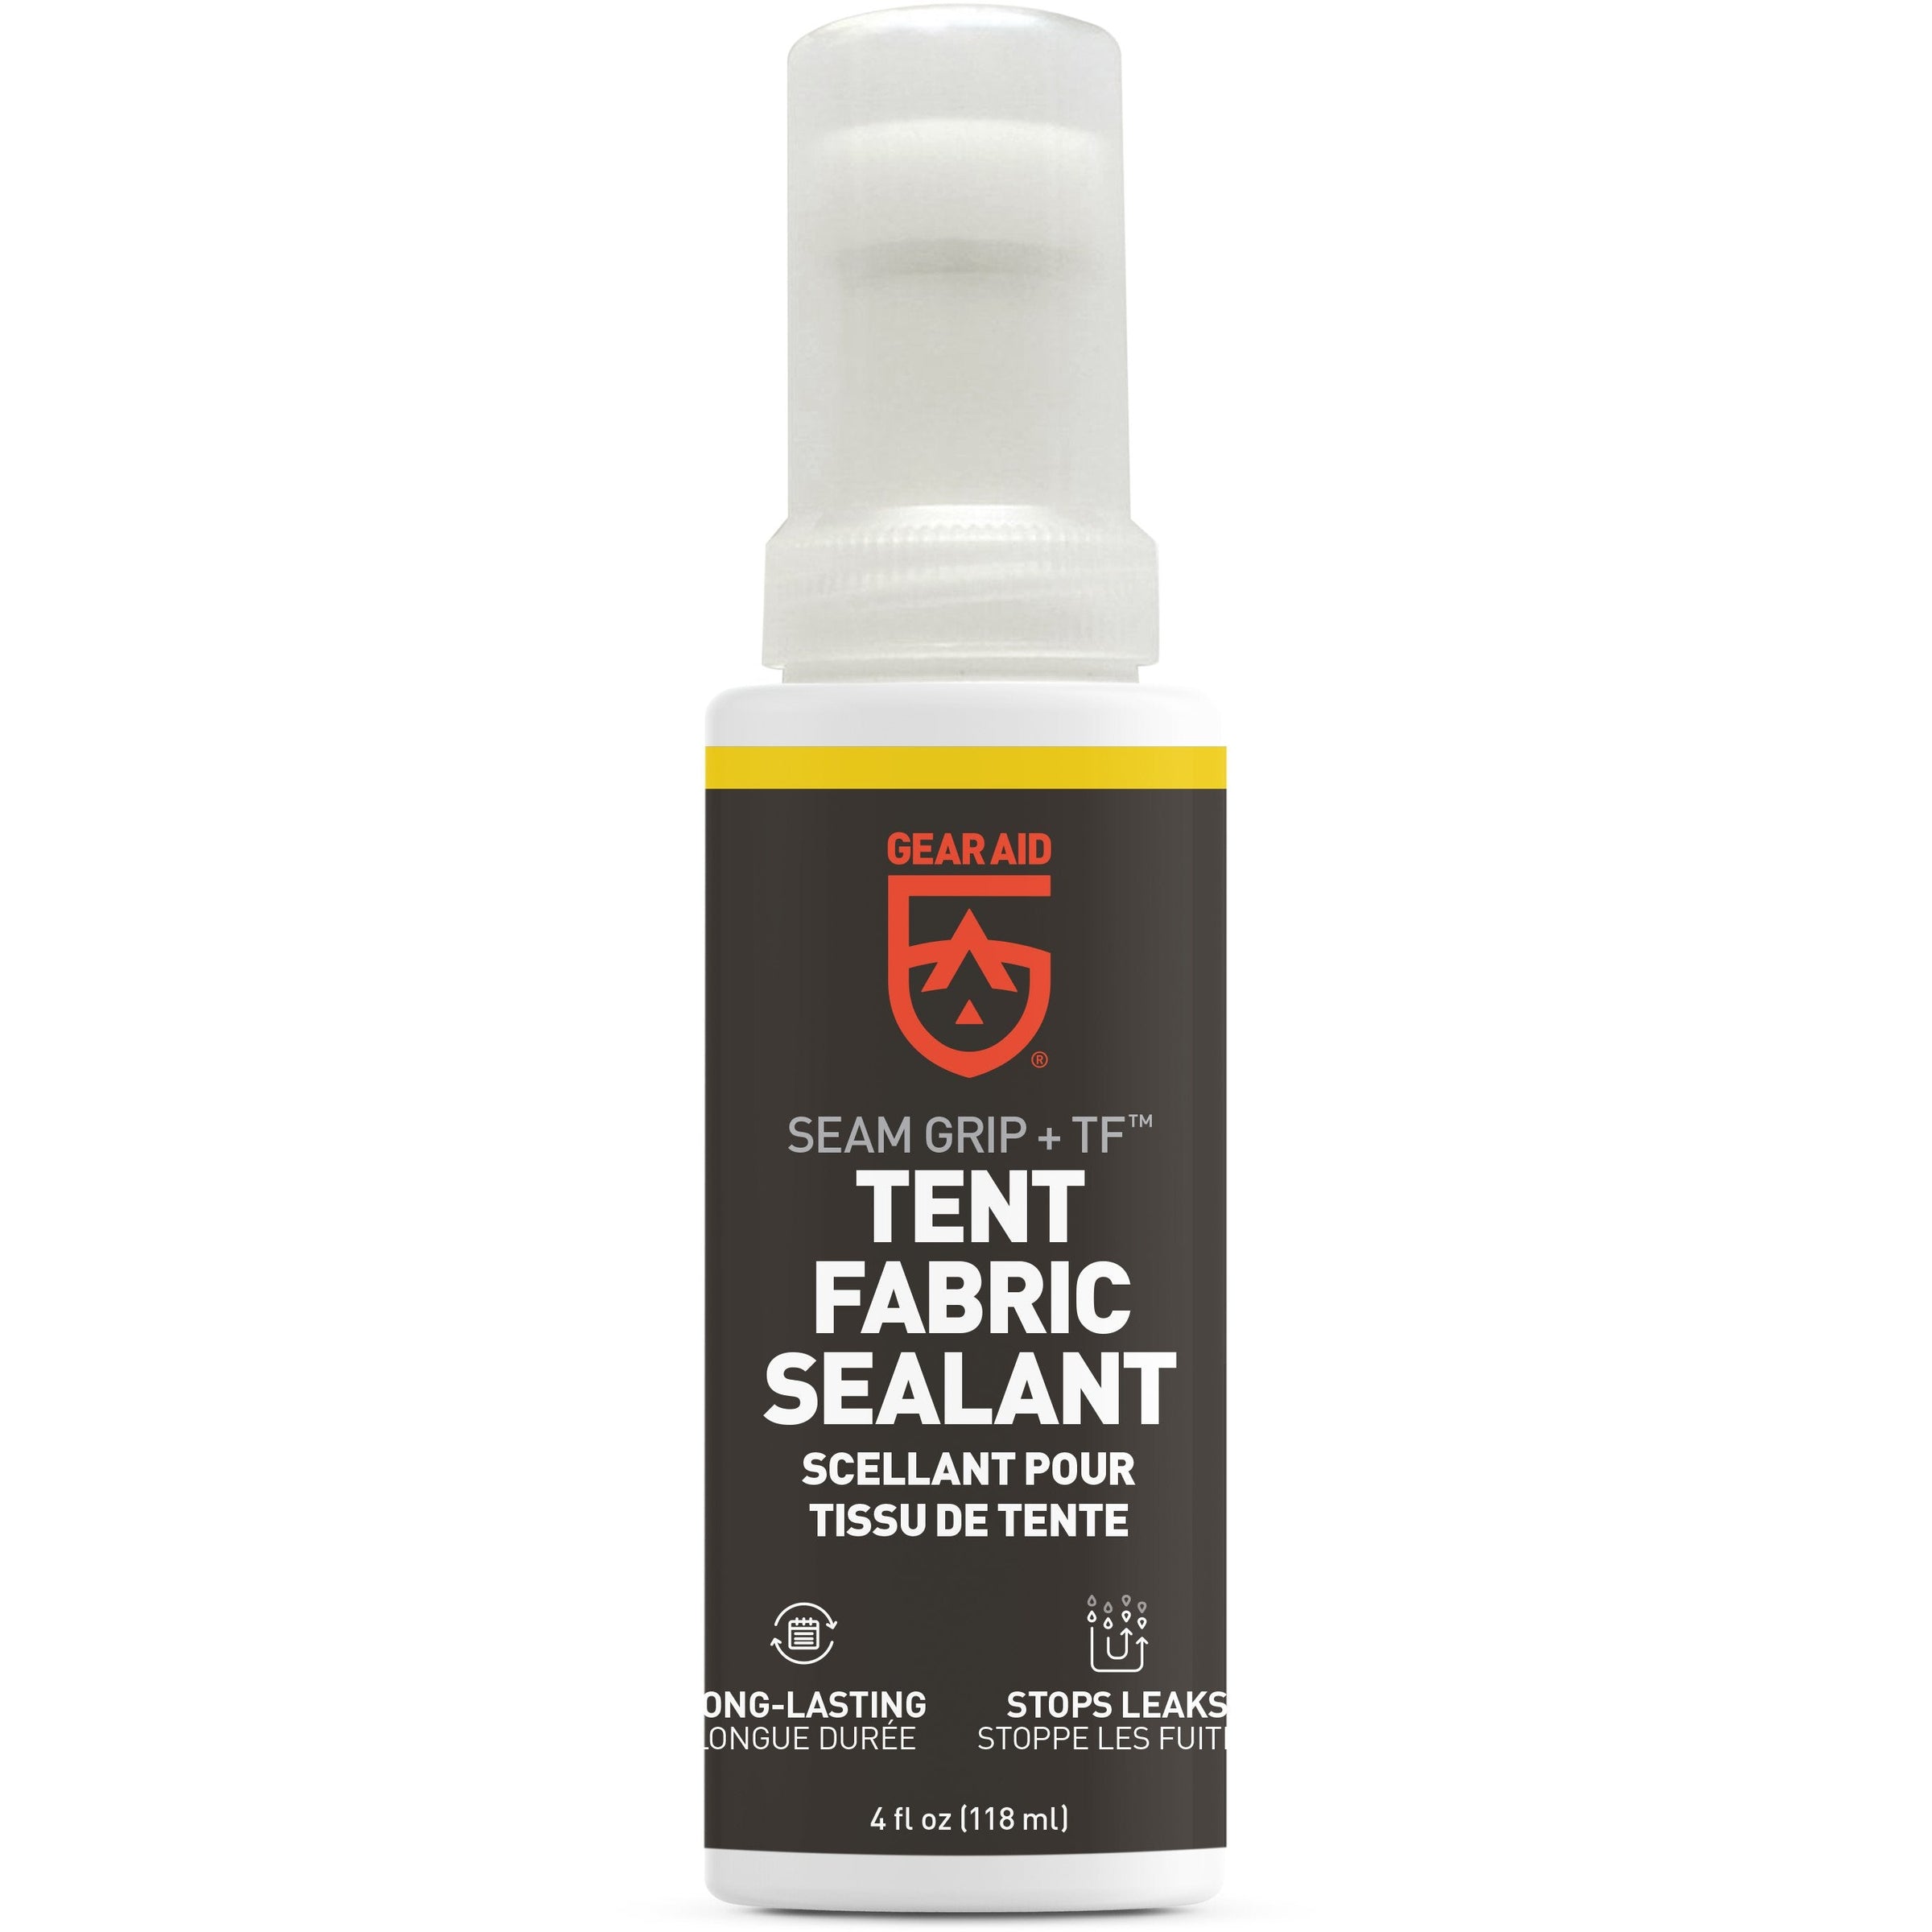 Seam Grip TF Tent Fabric Sealant 4 fl oz